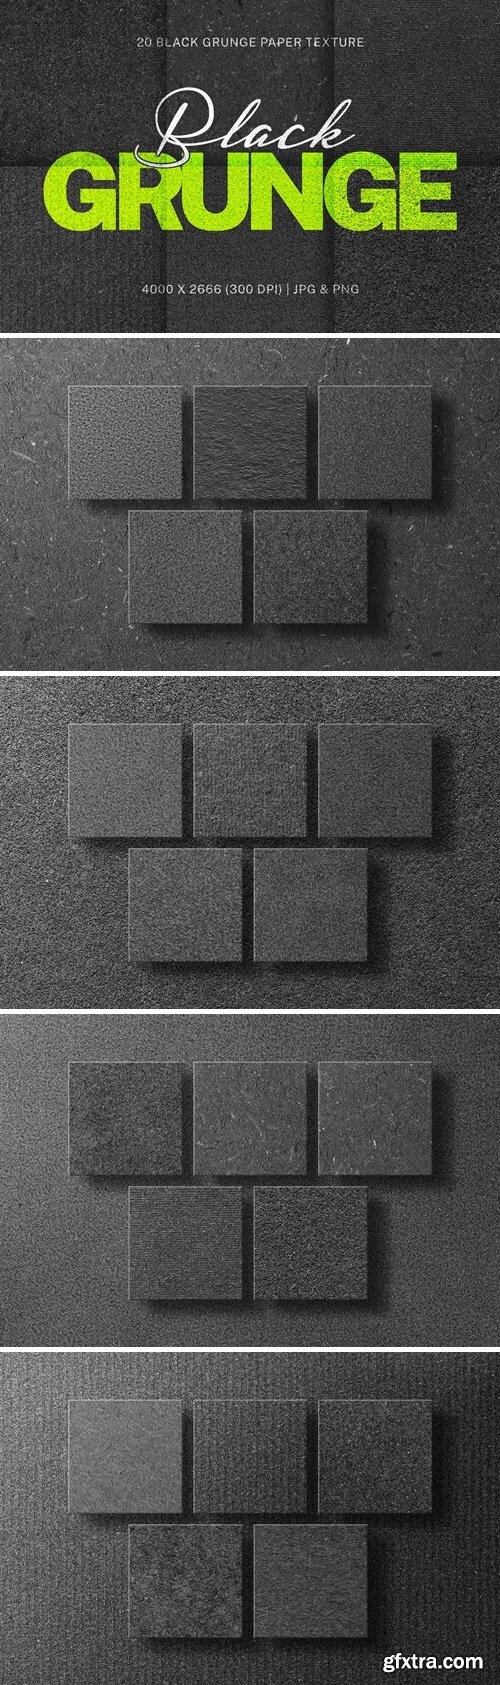 Black Grunge Paper Texture WKJPNL6